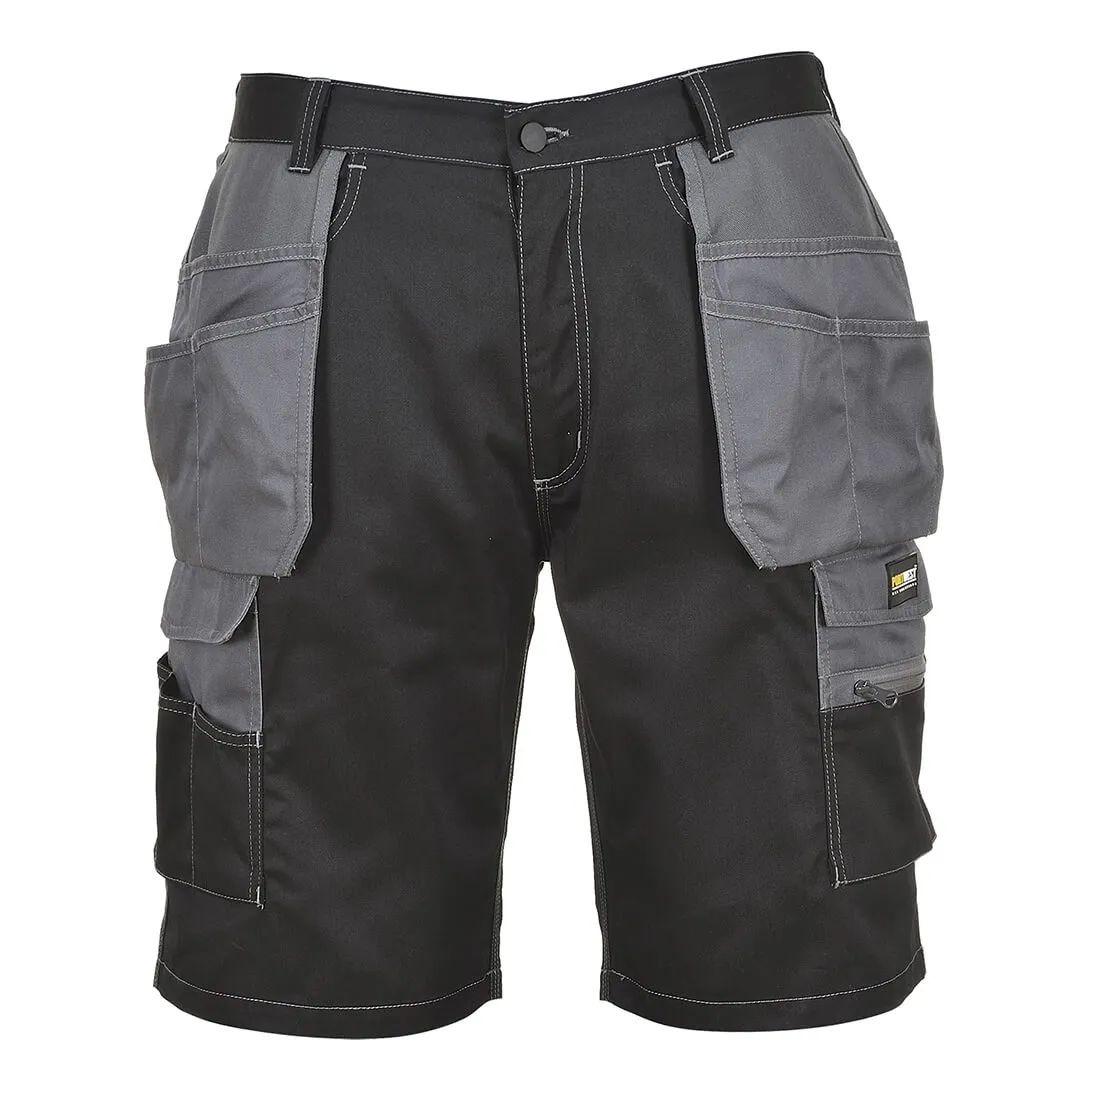 Portwest KS18 Granite Holster Shorts - Black / Grey, XL